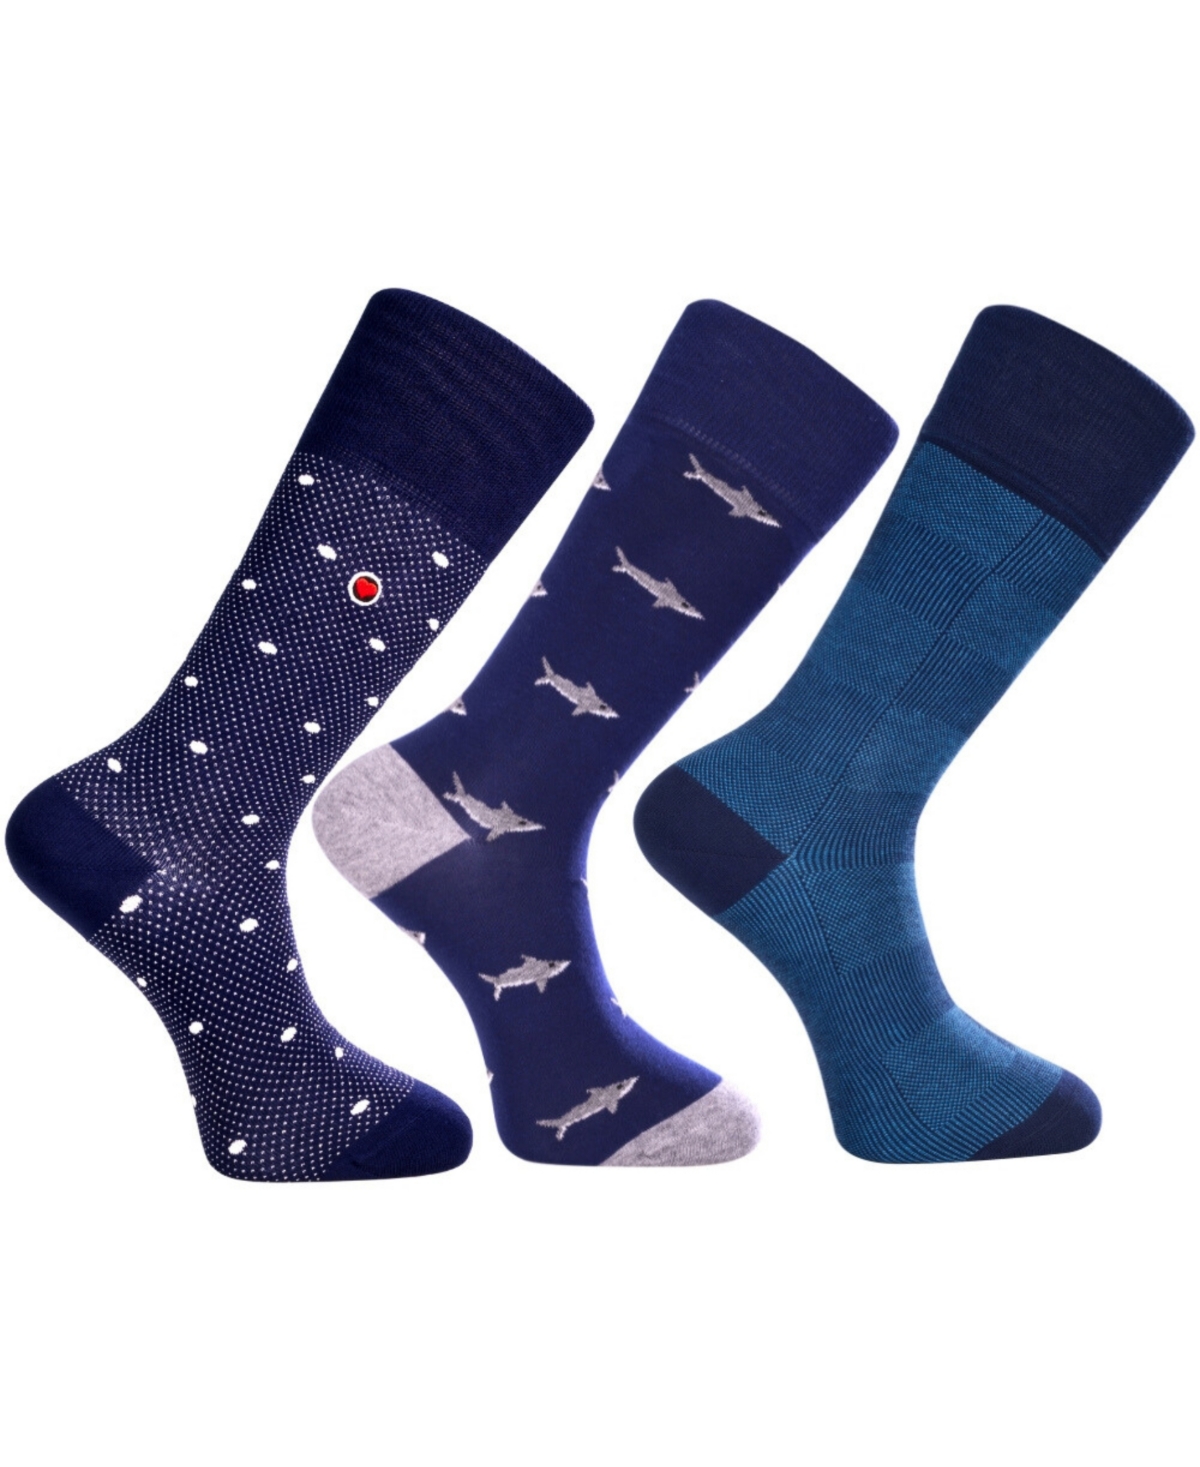 Men's Atlantic Bundle Luxury Mid-Calf Dress Socks with Seamless Toe Design, Pack of 3 - Multi Color